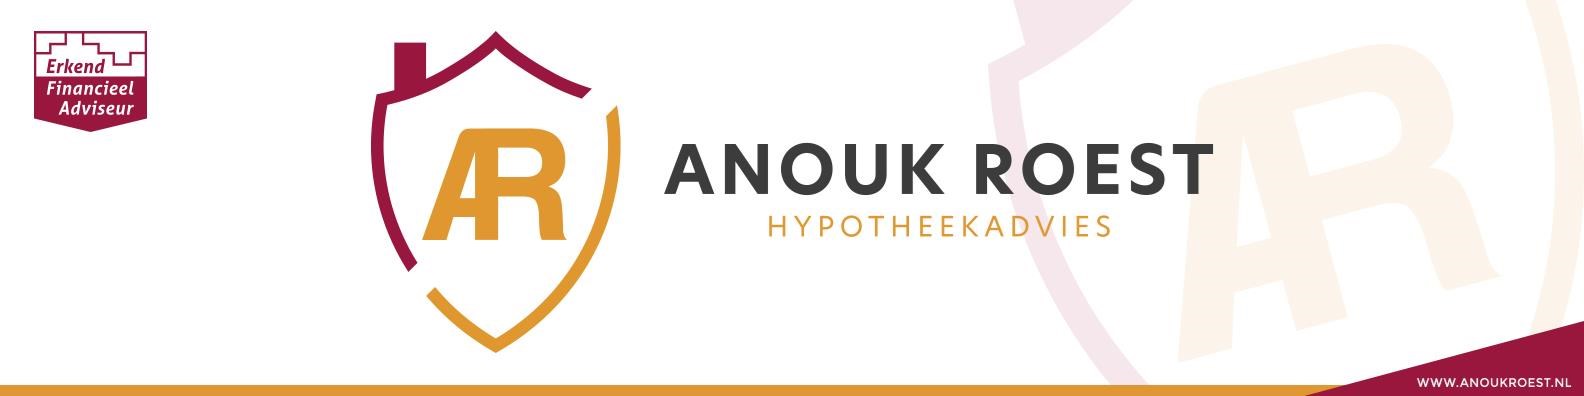 Logo van Anouk Roest Hypotheekadvies